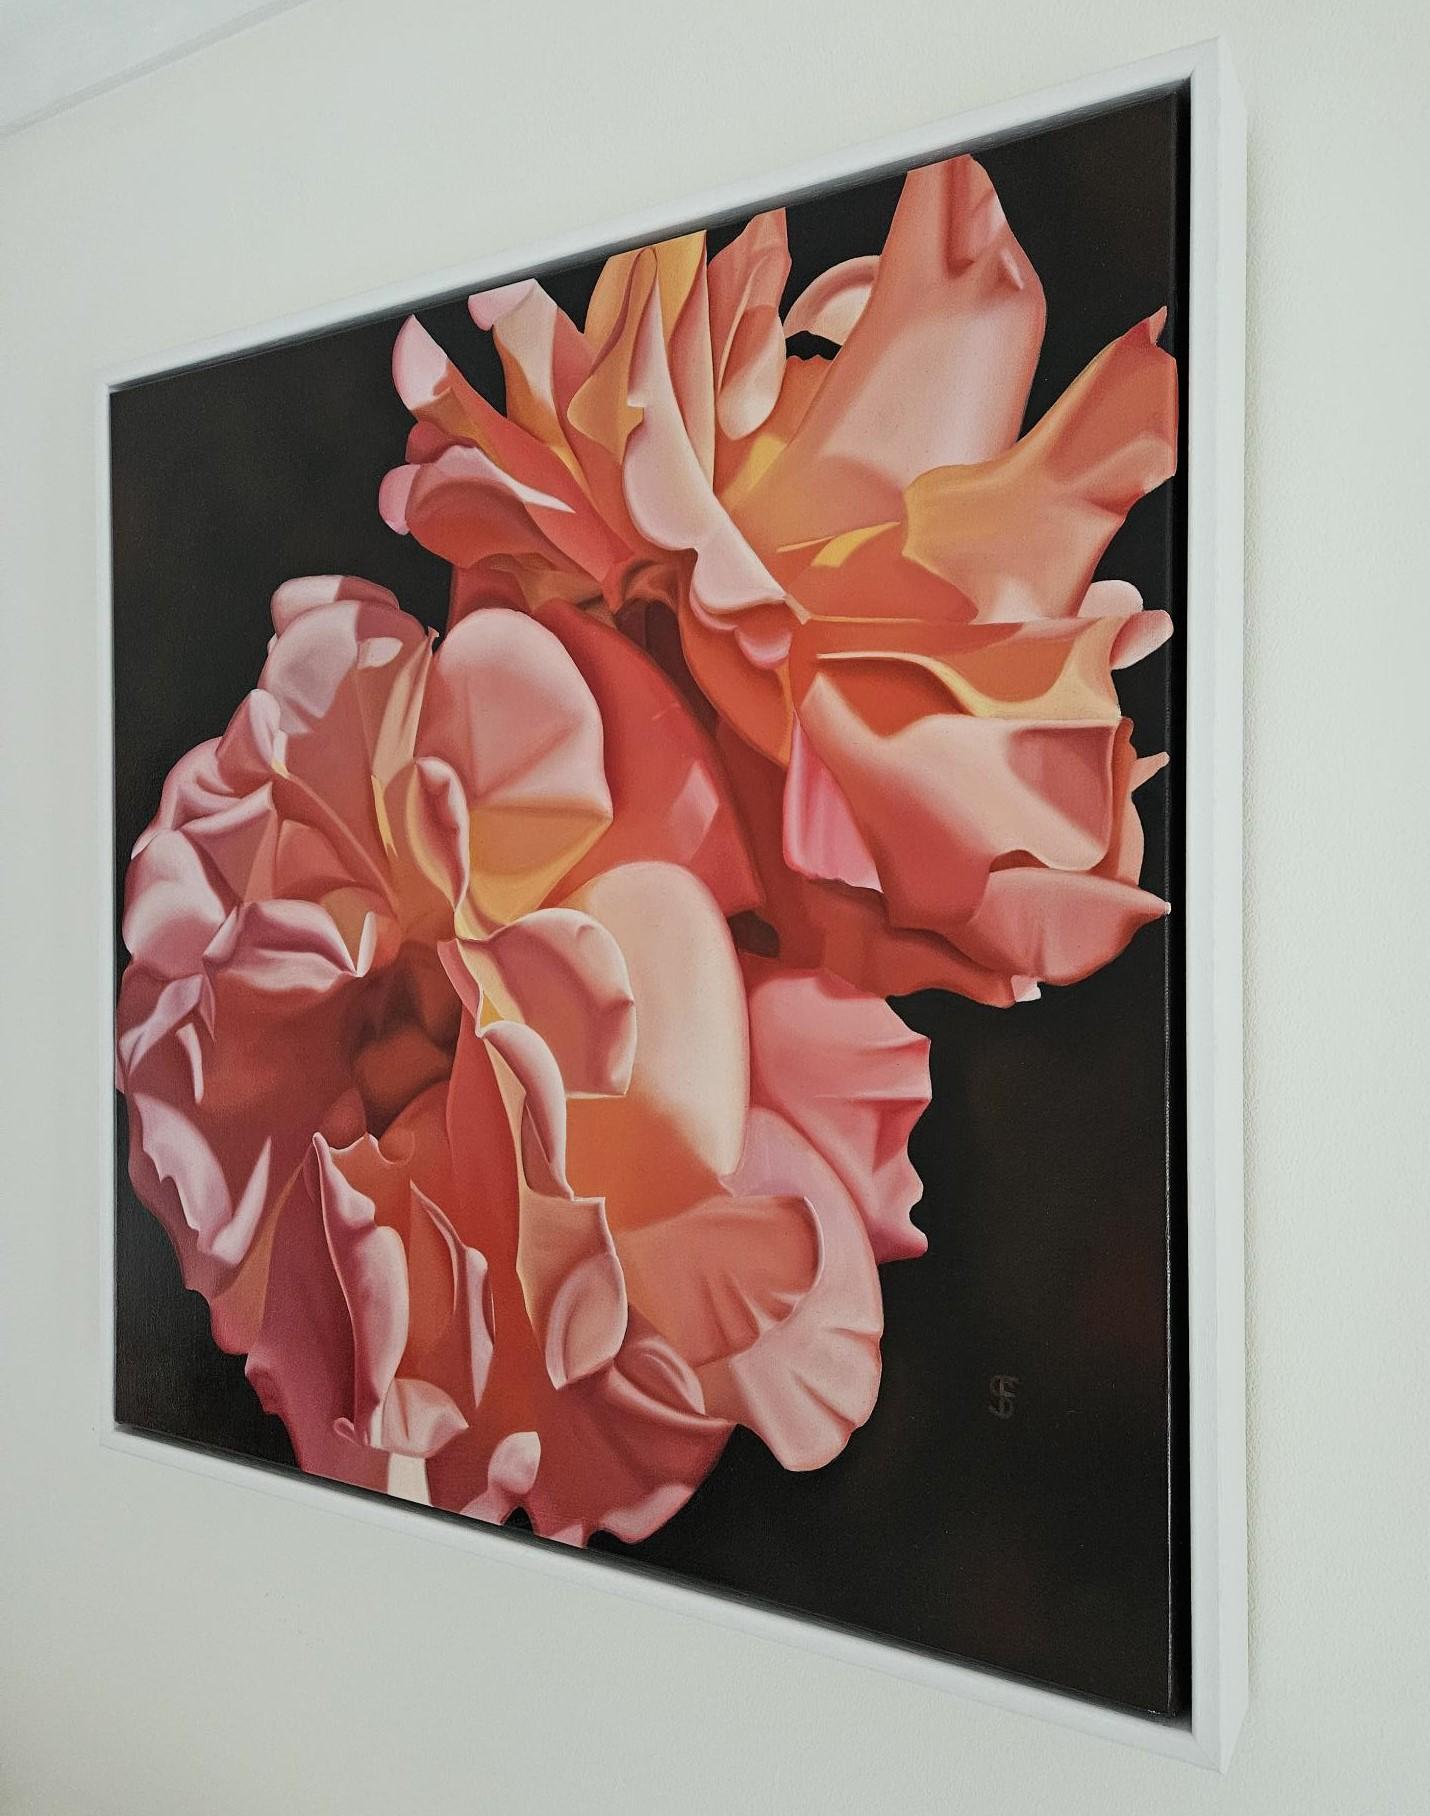 Tuti Fruiti - contemporary hyperrealistic flower rose oil painting - Contemporary Painting by Steve Foster